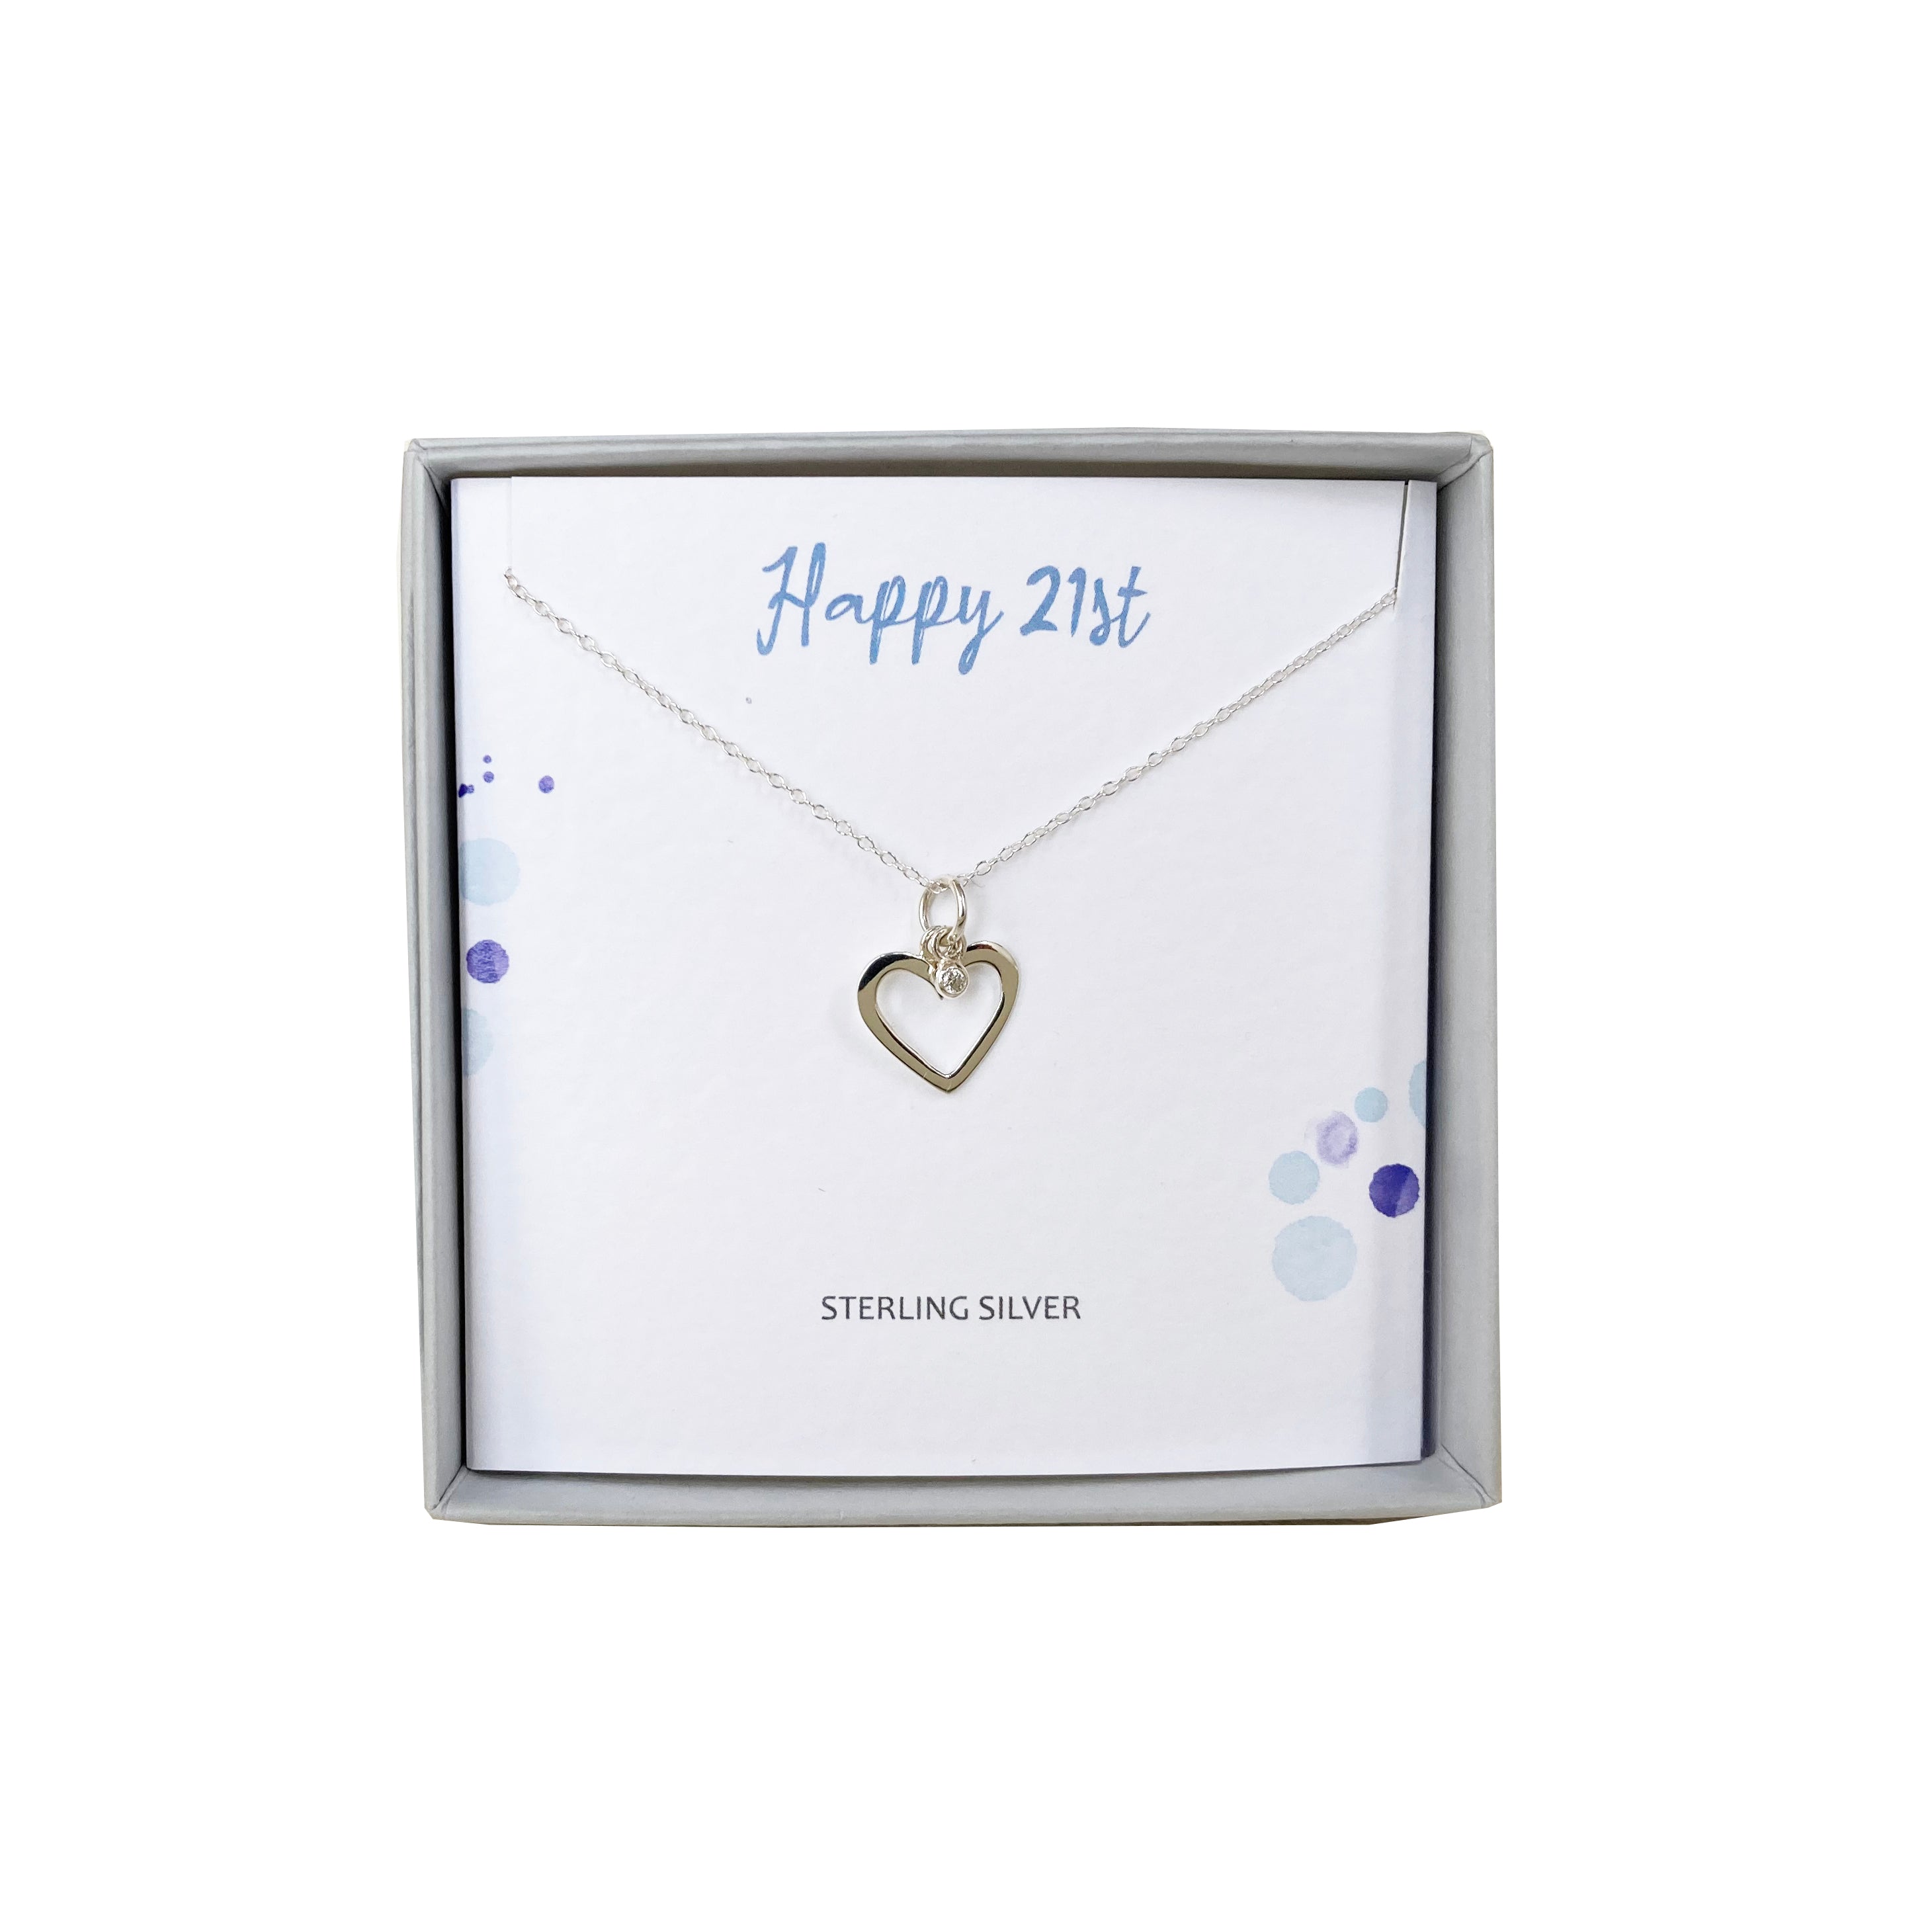 Silver Studio Wishes - Happy 21st Birthday pendant